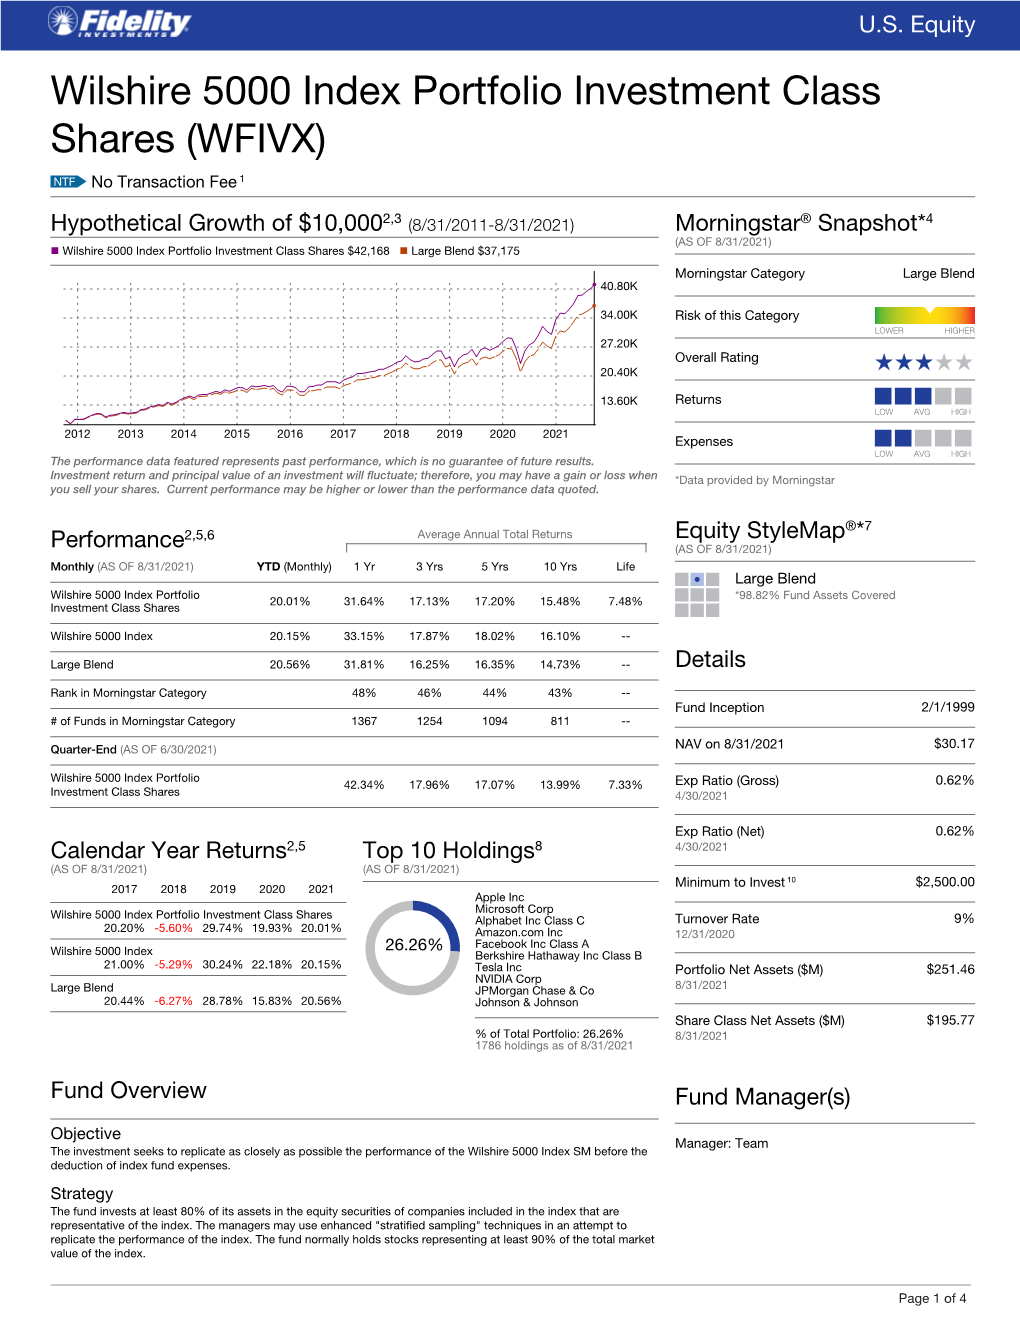 Wilshire 5000 Index Portfolio Investment Class Shares (WFIVX)